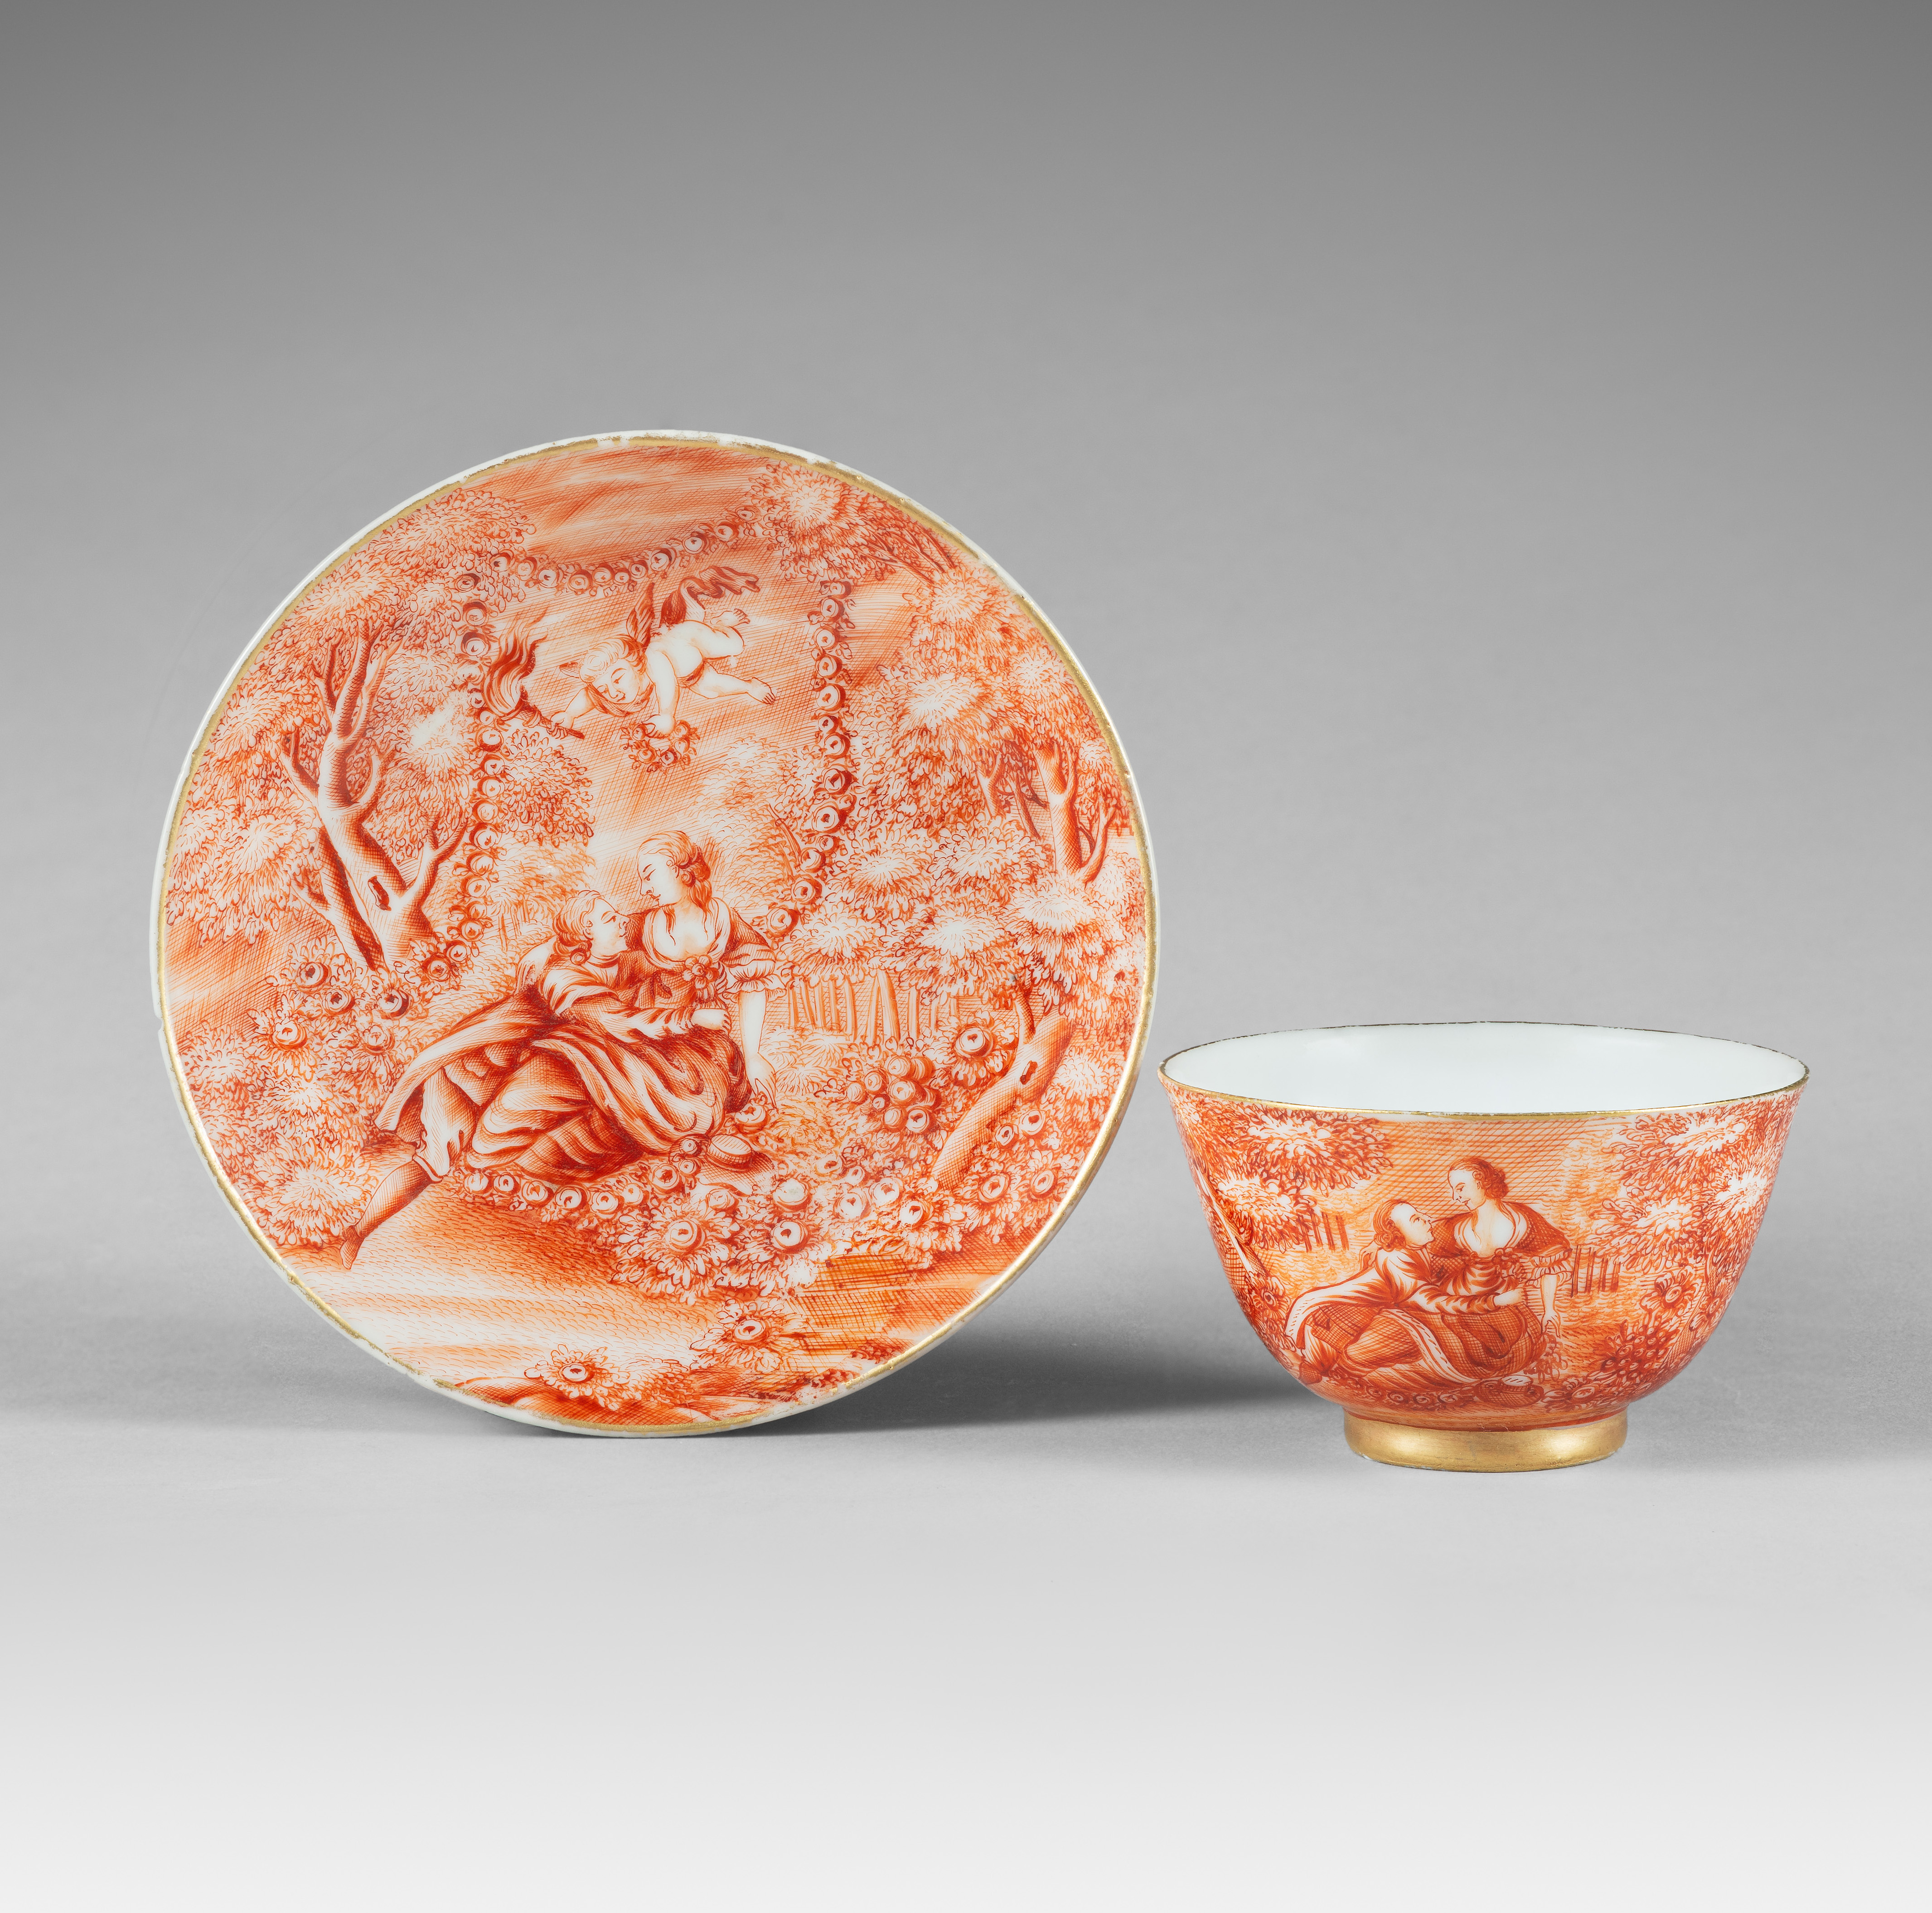 Porcelaine Qianlong period (1736-1795), ca. 1766-1770, Chine